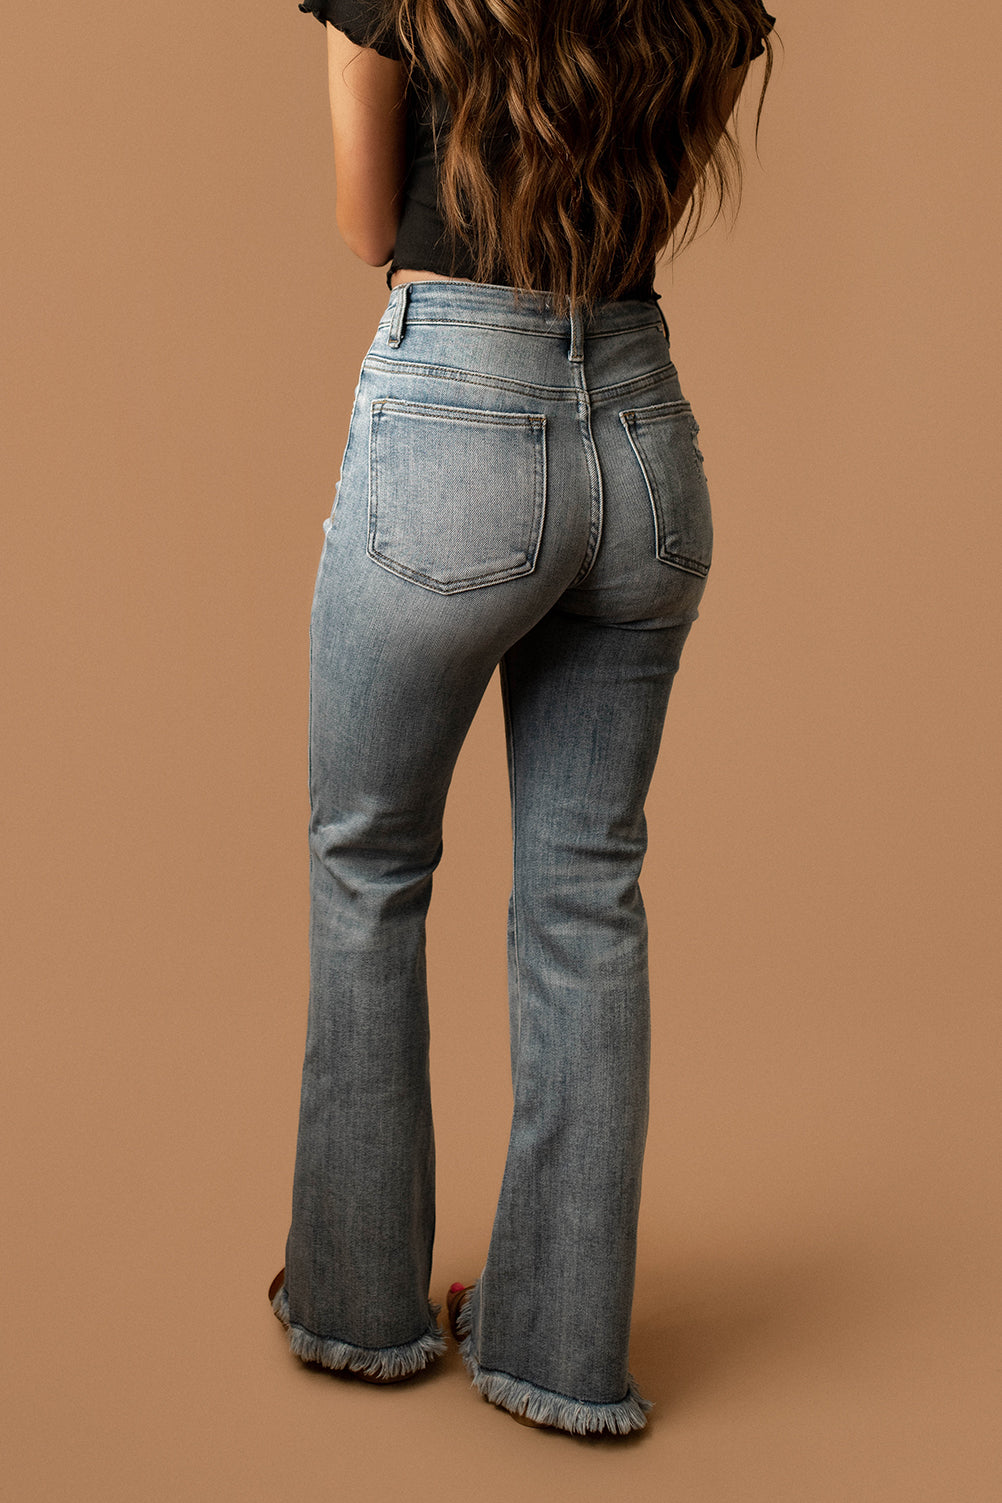 Ariana Vintage Frayed Hem Flare Jeans